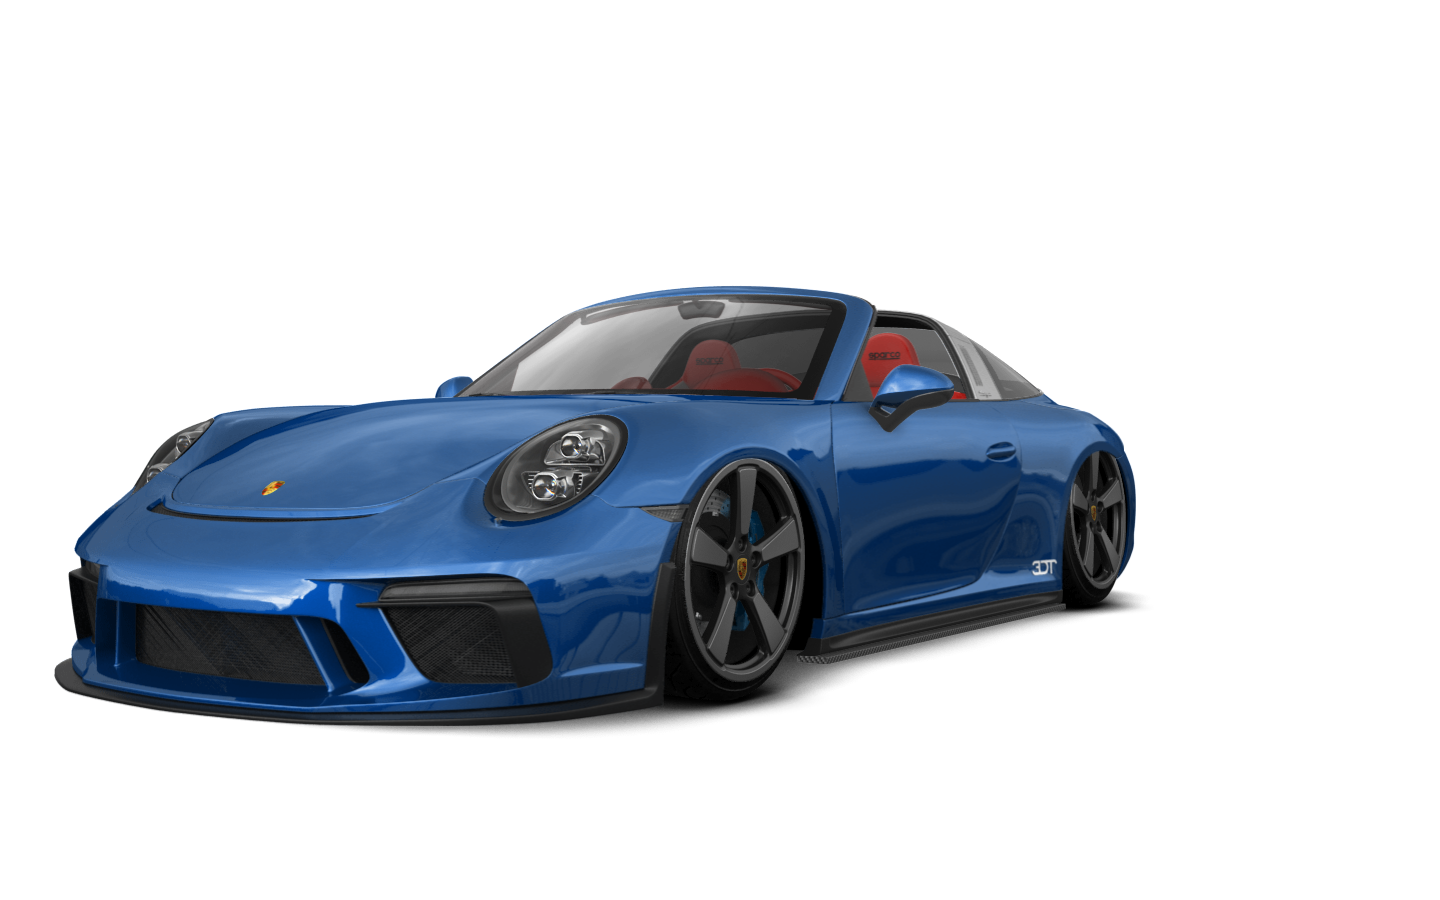 Porsche 911 Carrera Targa top 2014 tuning